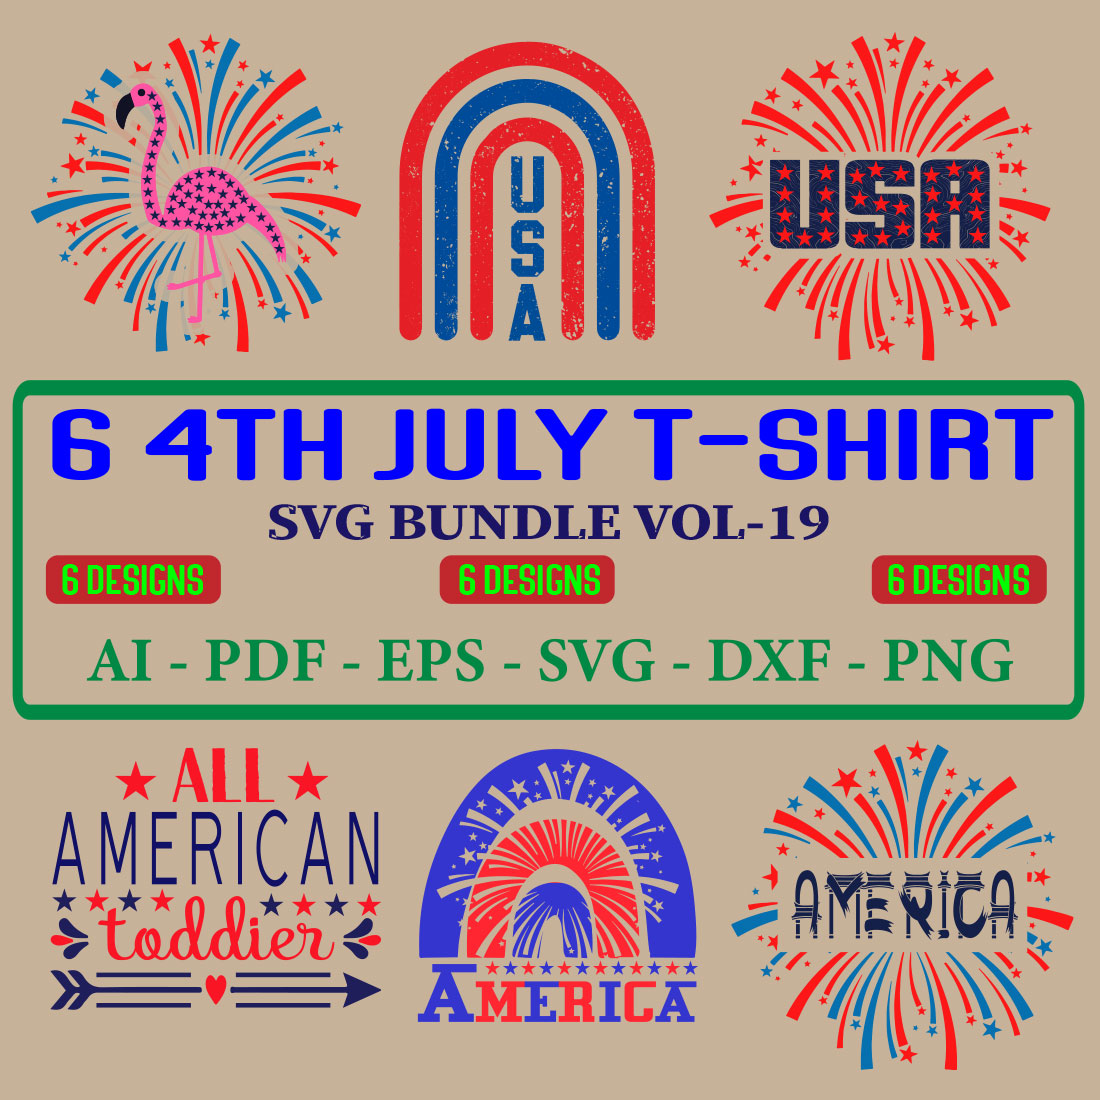 6 4th july T-shirt SVG Bundle Vol-19 cover image.